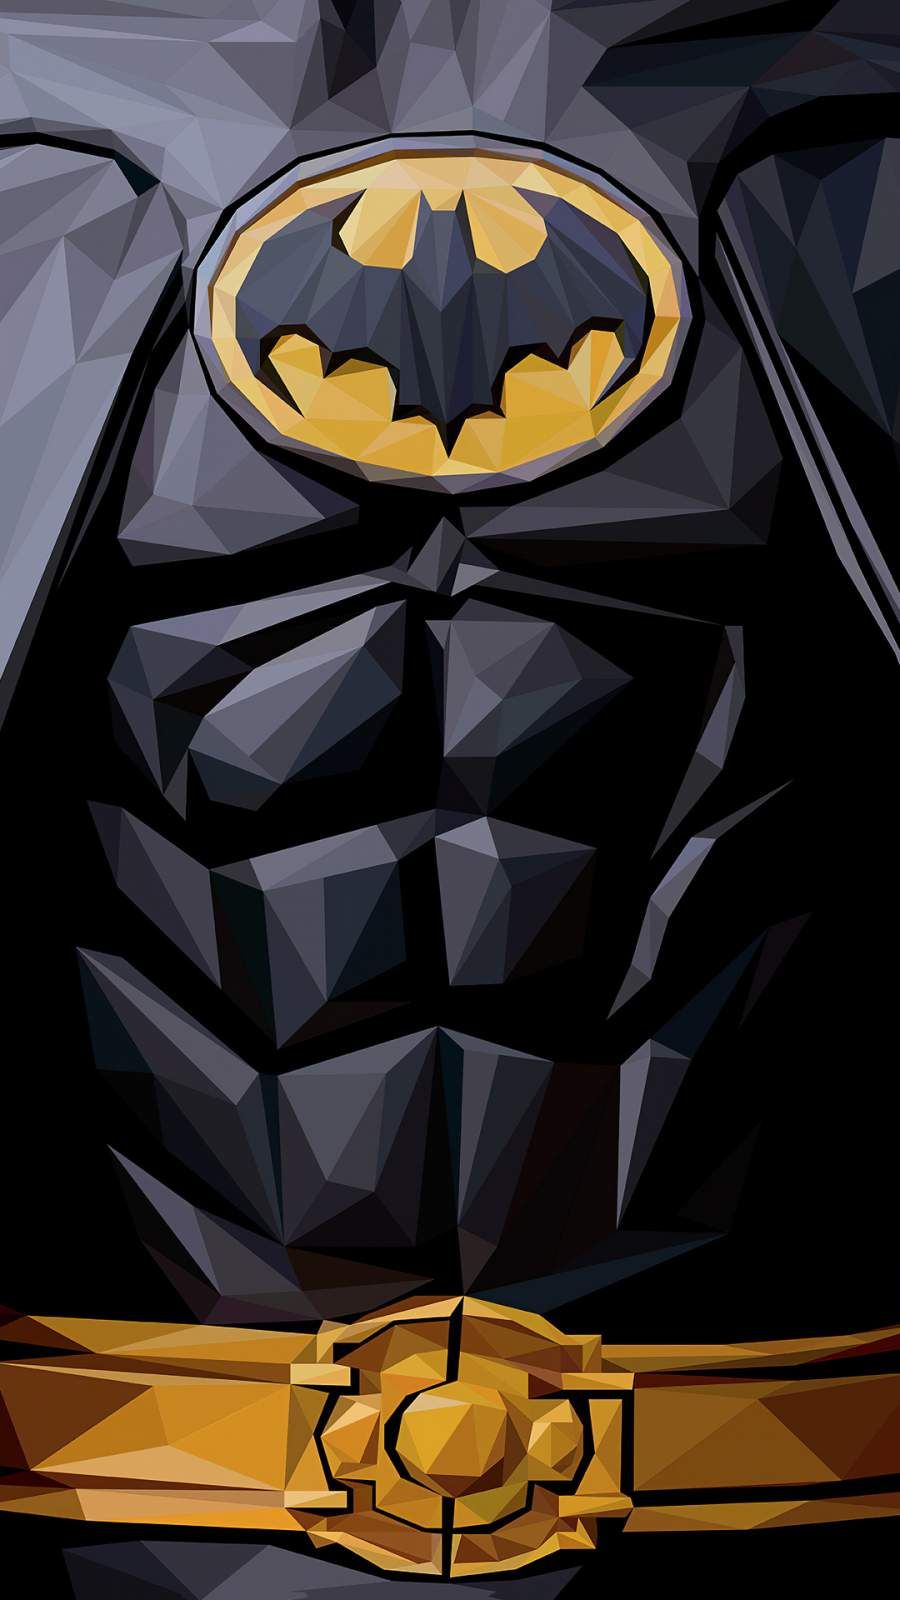 Batman iphone wallpapers